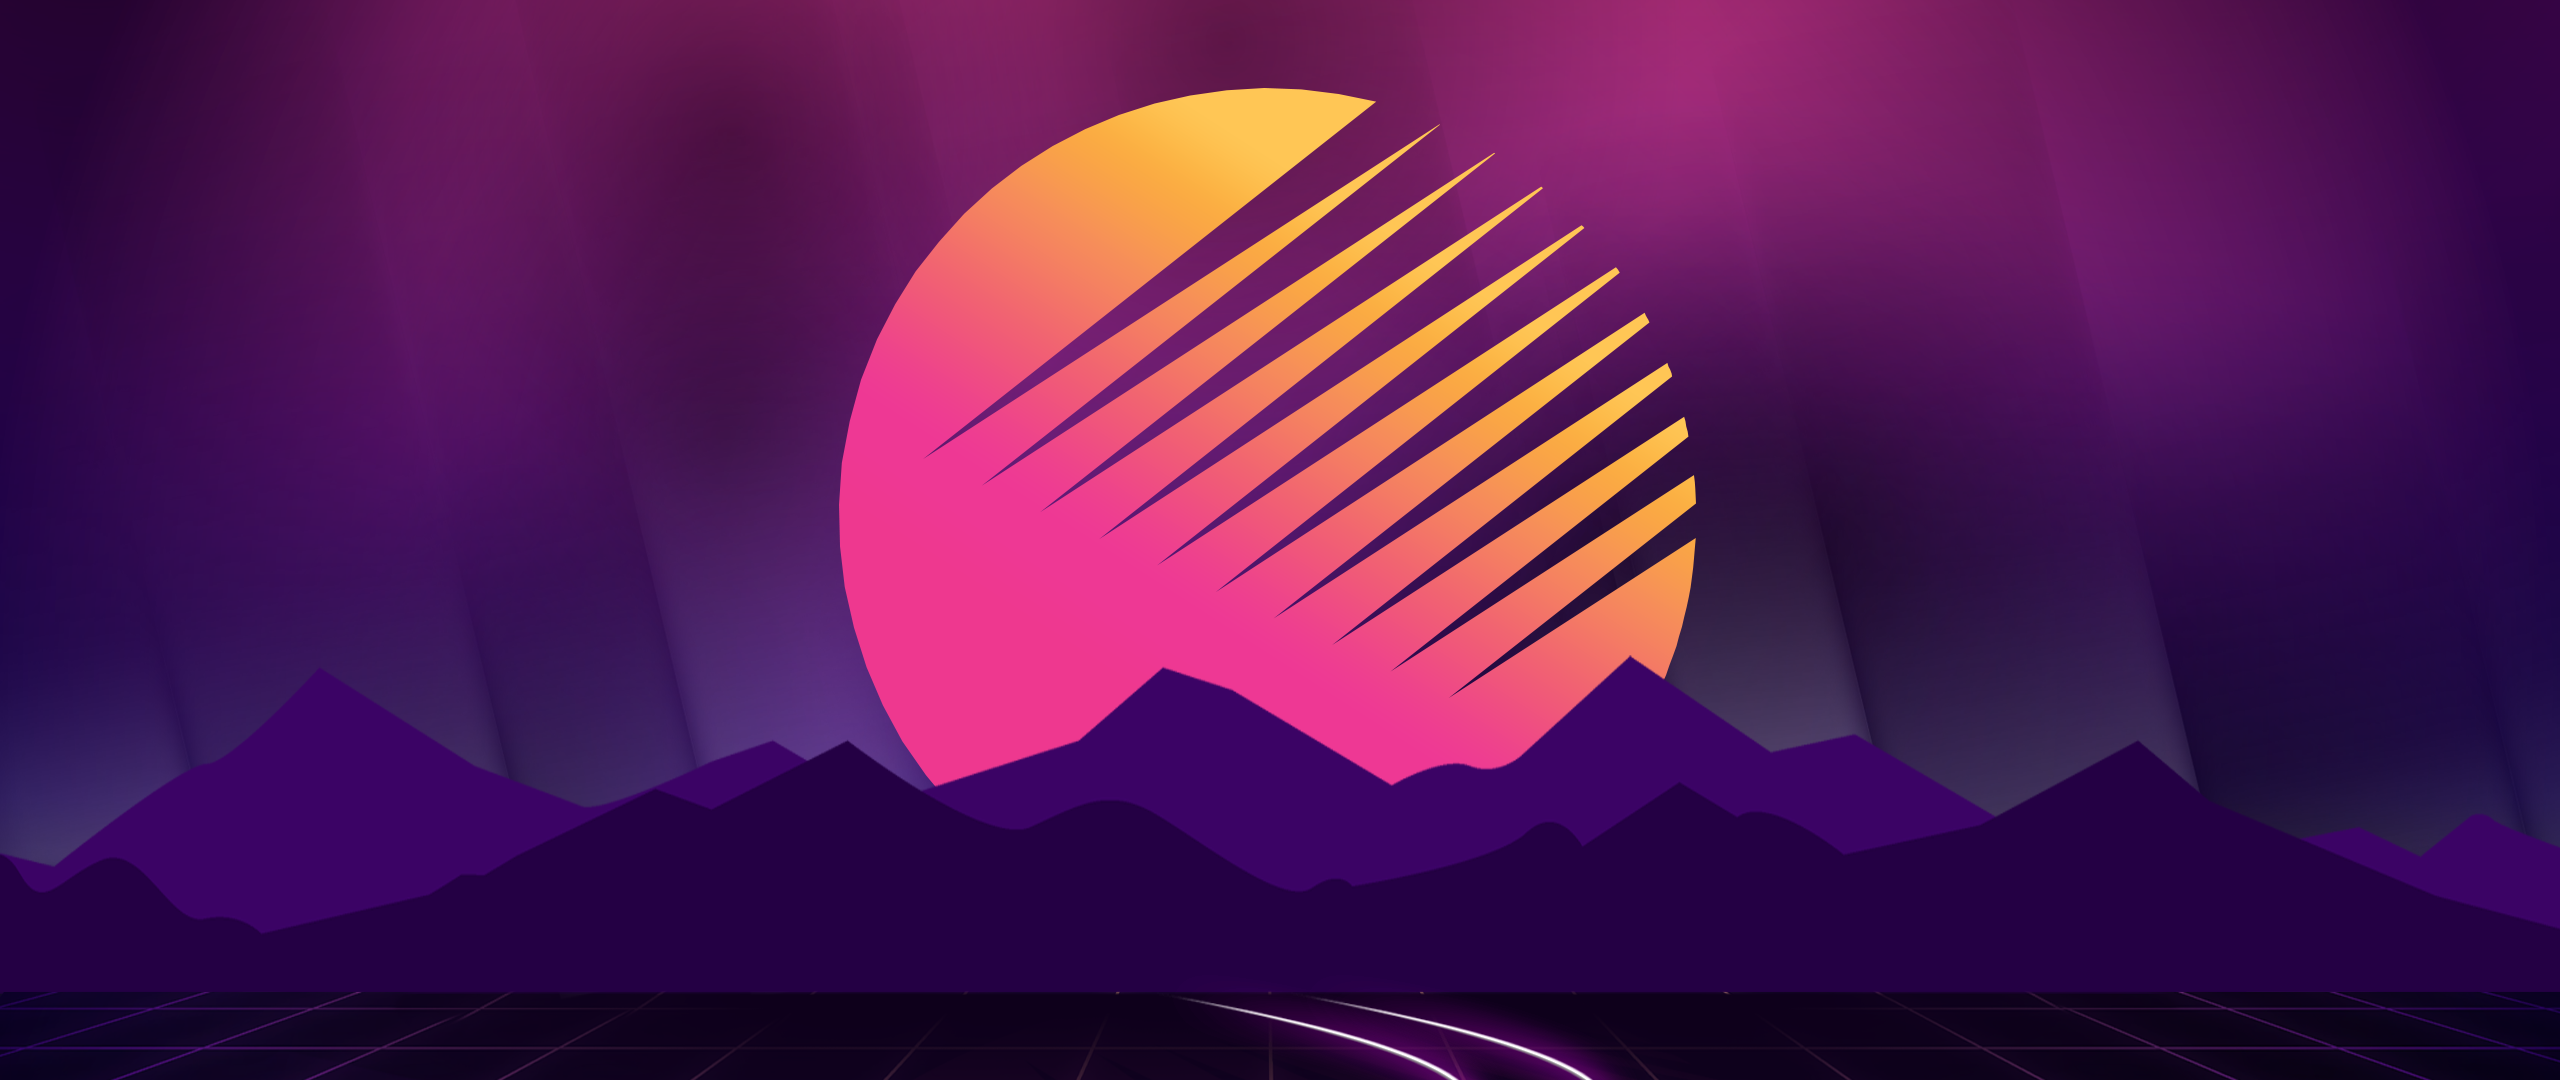 Retrowave Sunset [2560x1440] (x Post R Vectorwallpaper)